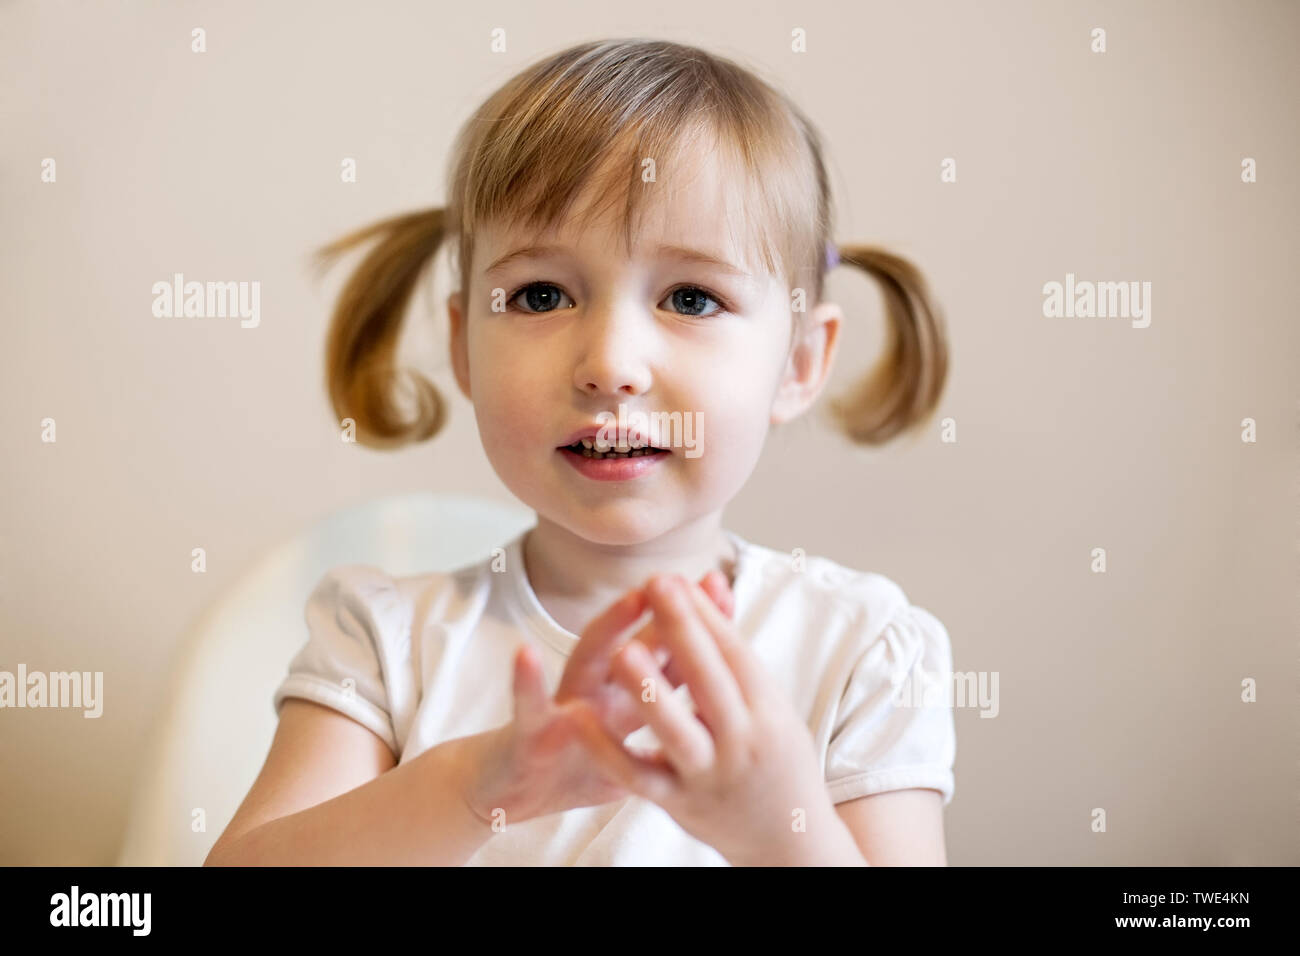 little amazed kid Caucasian girl with wide-open eyes cute closeup portrait on plain background Stock Photo